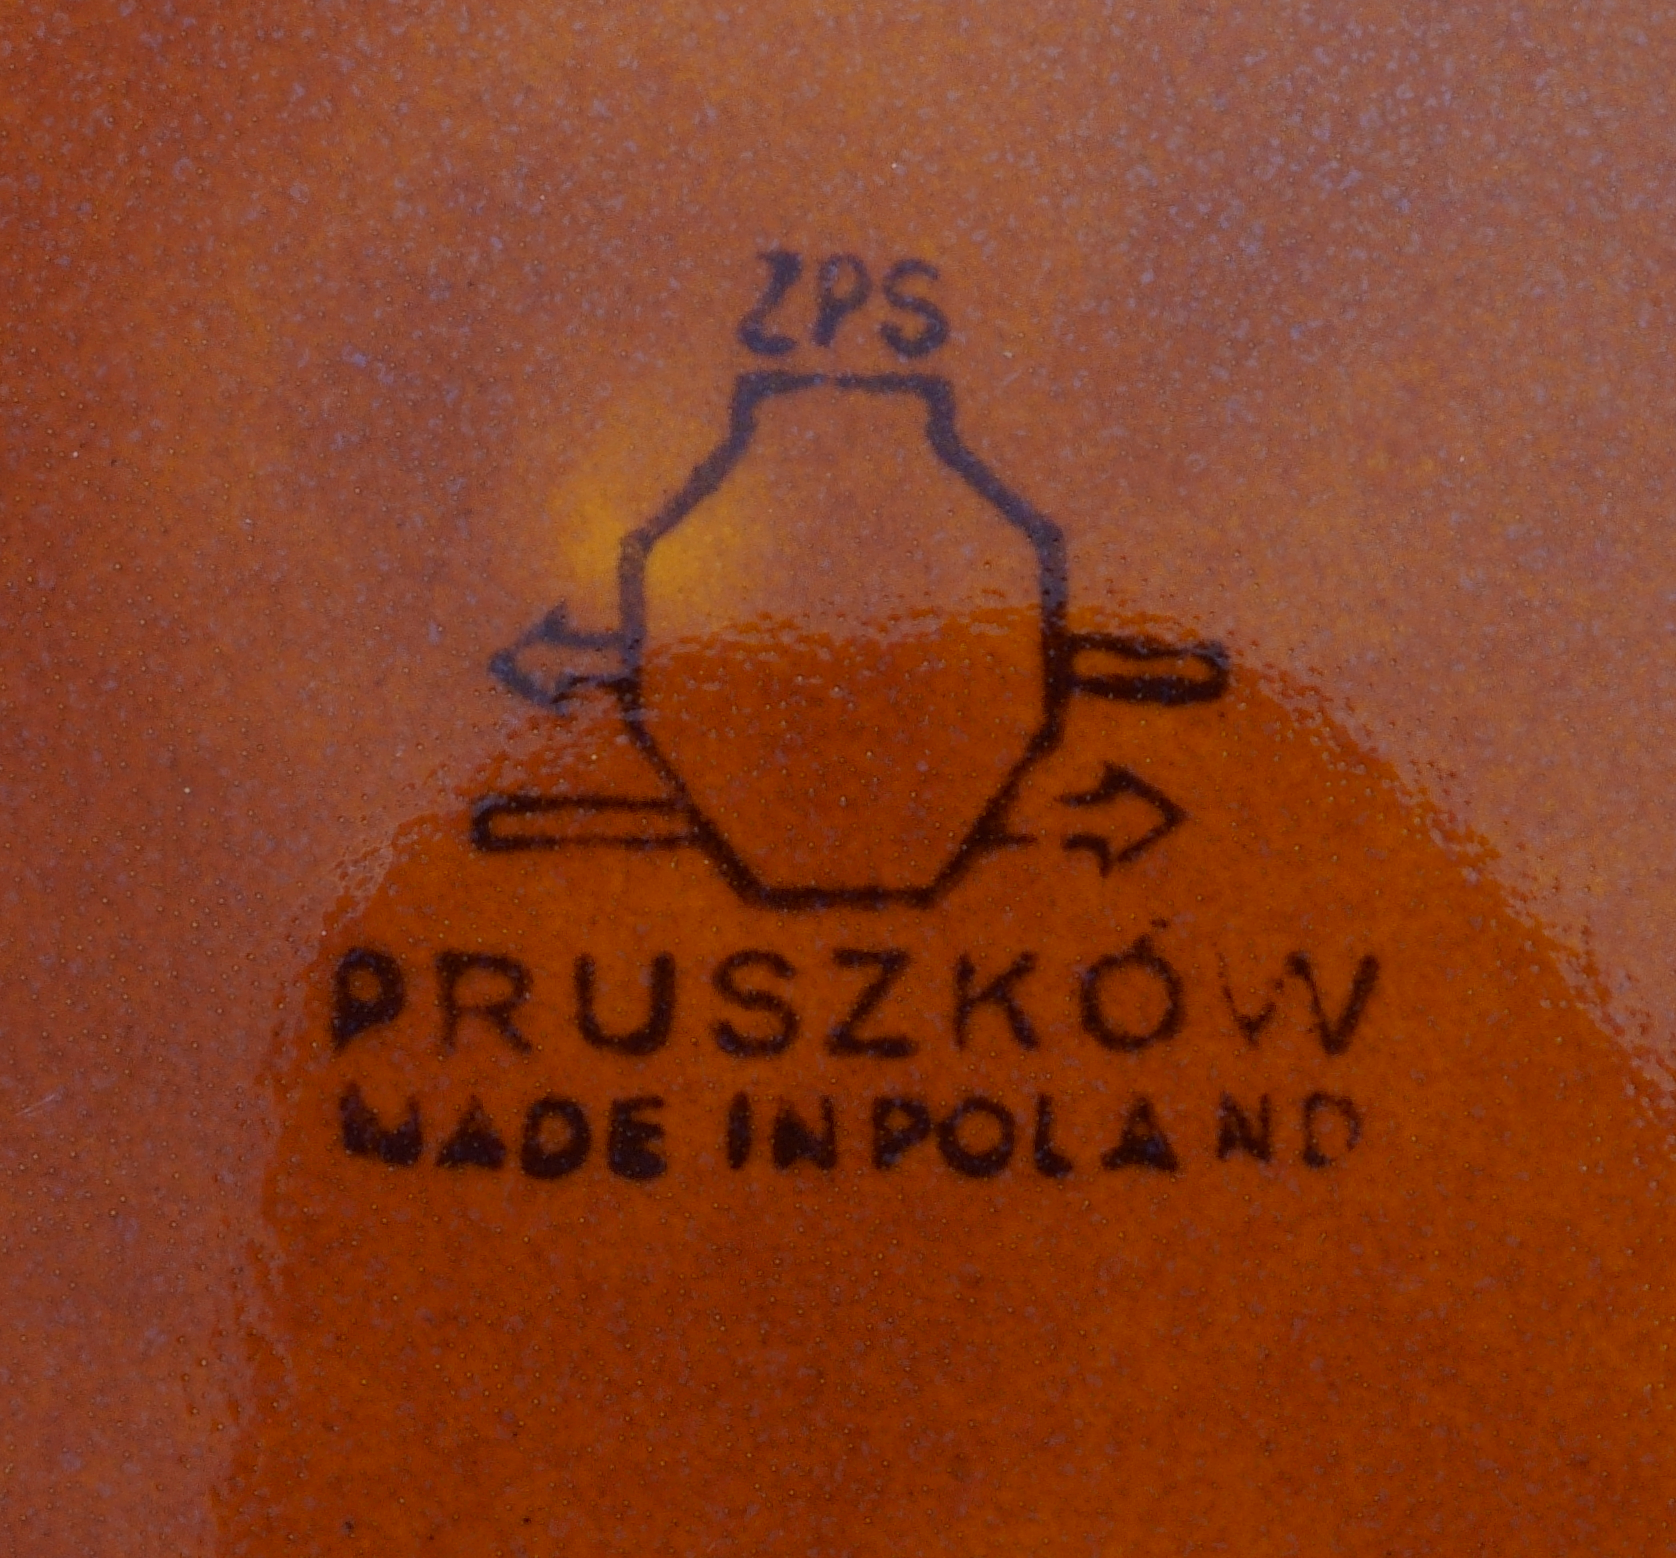 “Pruszków” Porcelite Tableware Factory in Pruszków